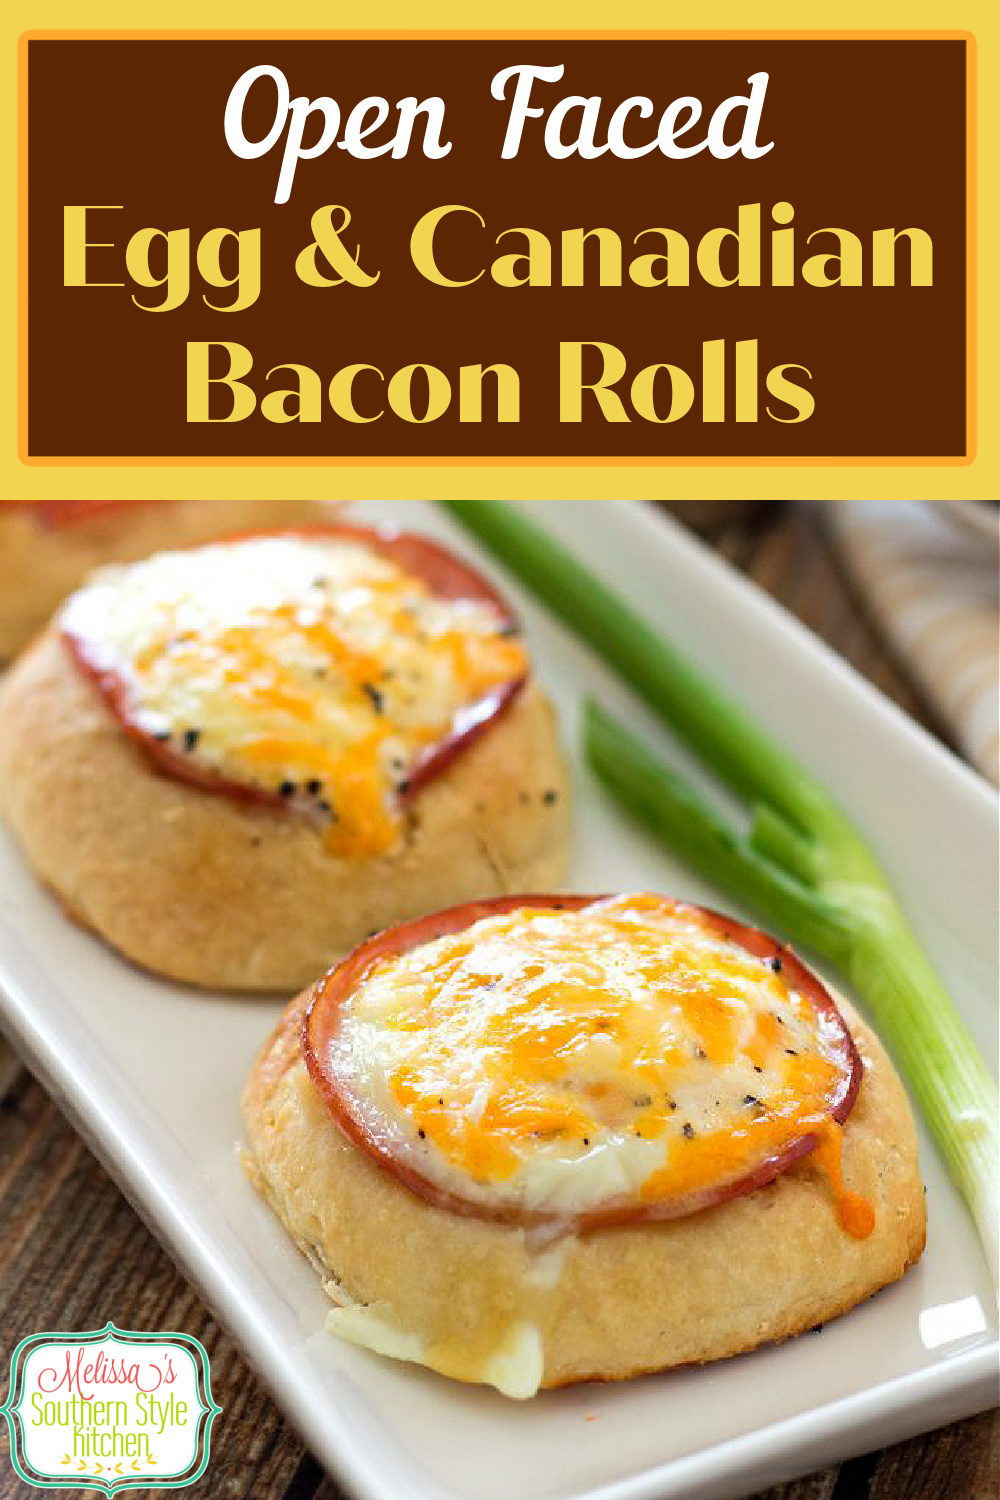 Enjoy these handheld Open Faced Egg and Canadian Bacon Rolls on the go #baconandeggs #eggs #canadianbacon #bacon #rolls #brunch #breakfastrecipes #easyrecipes #hnolidaybrunch #ham #southernfood #southernrecipes #breadrecipes via @melissasssk